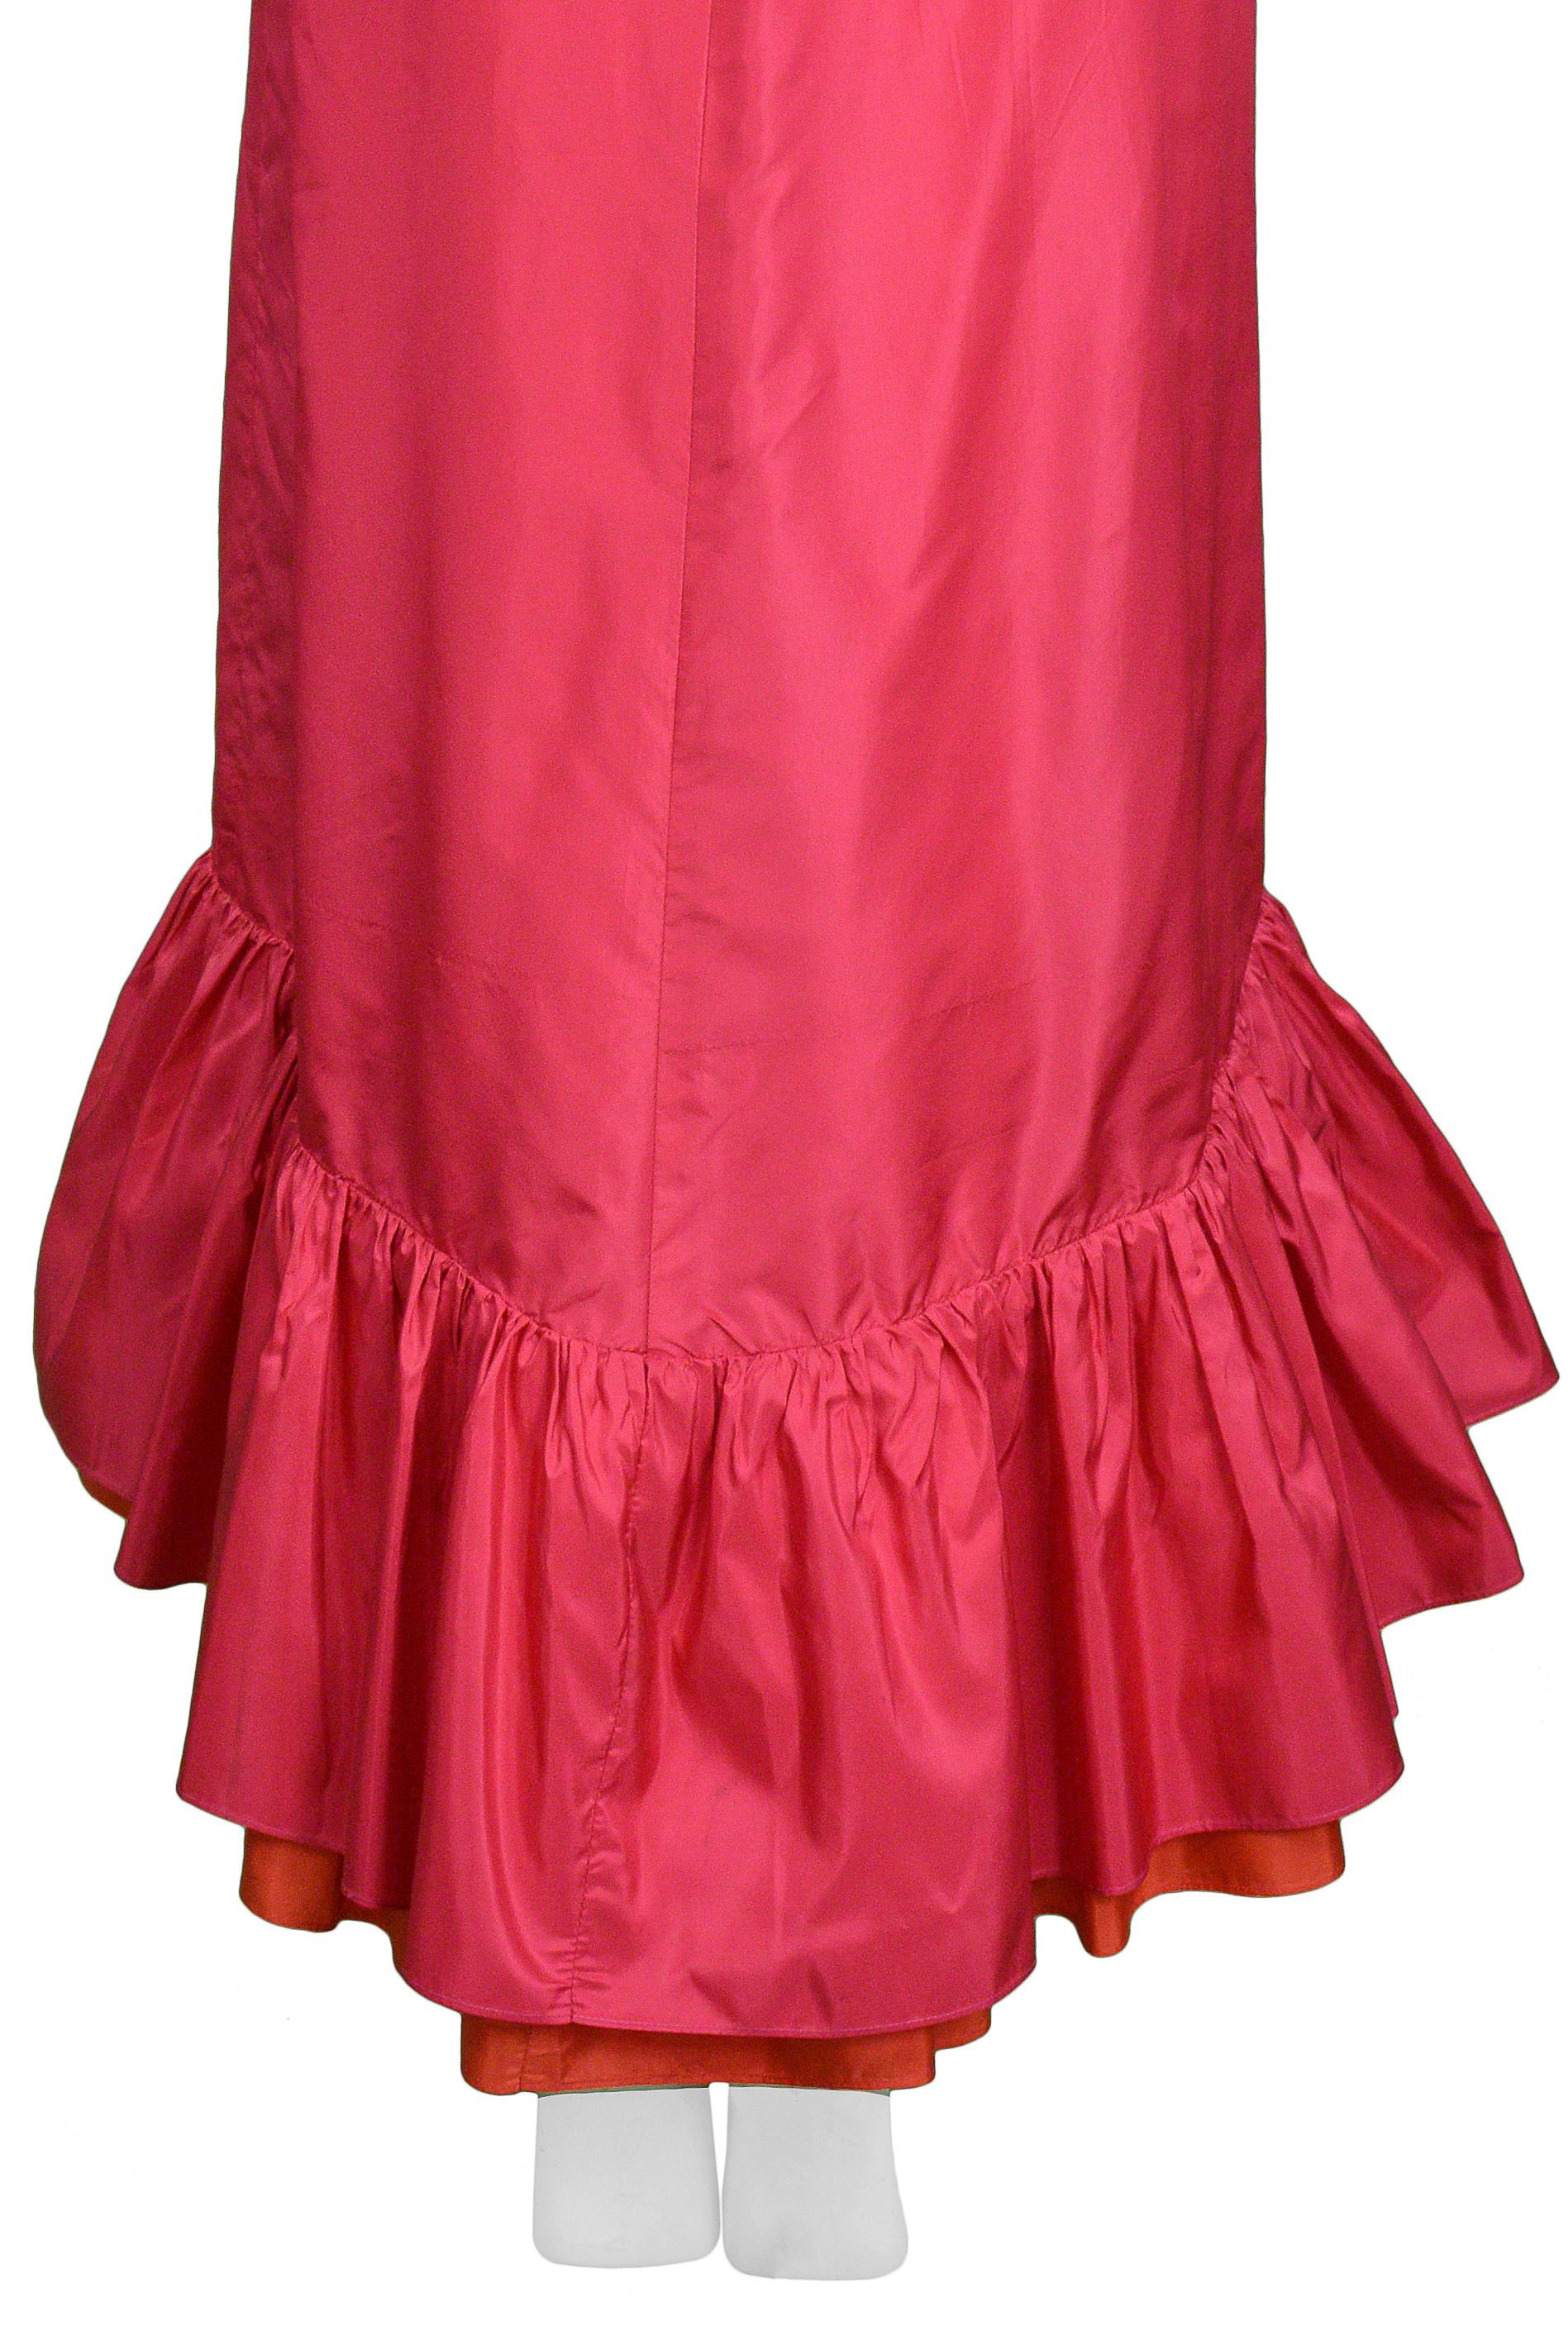 Yves Saint Laurent YSL Pink Taffeta Maxi Skirt With Ruffles For Sale 1